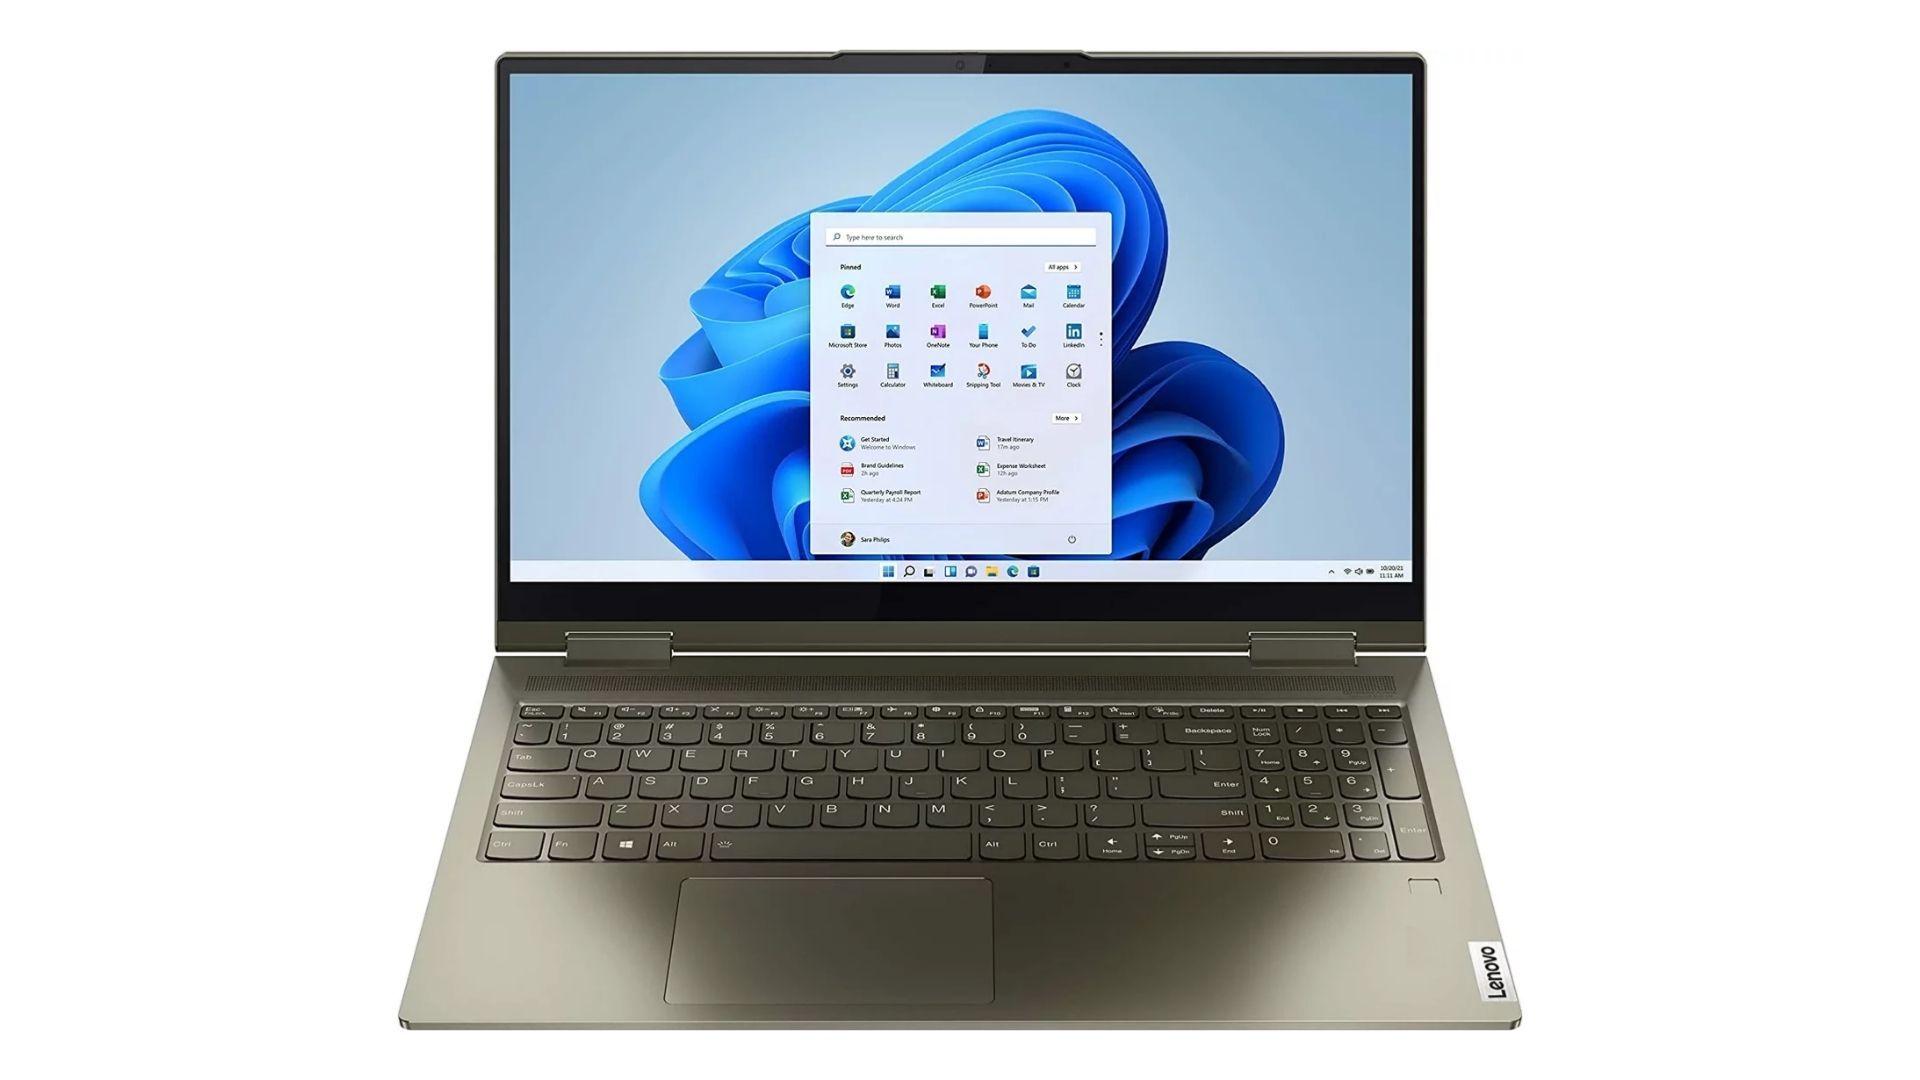 Levovo Yoga laptop